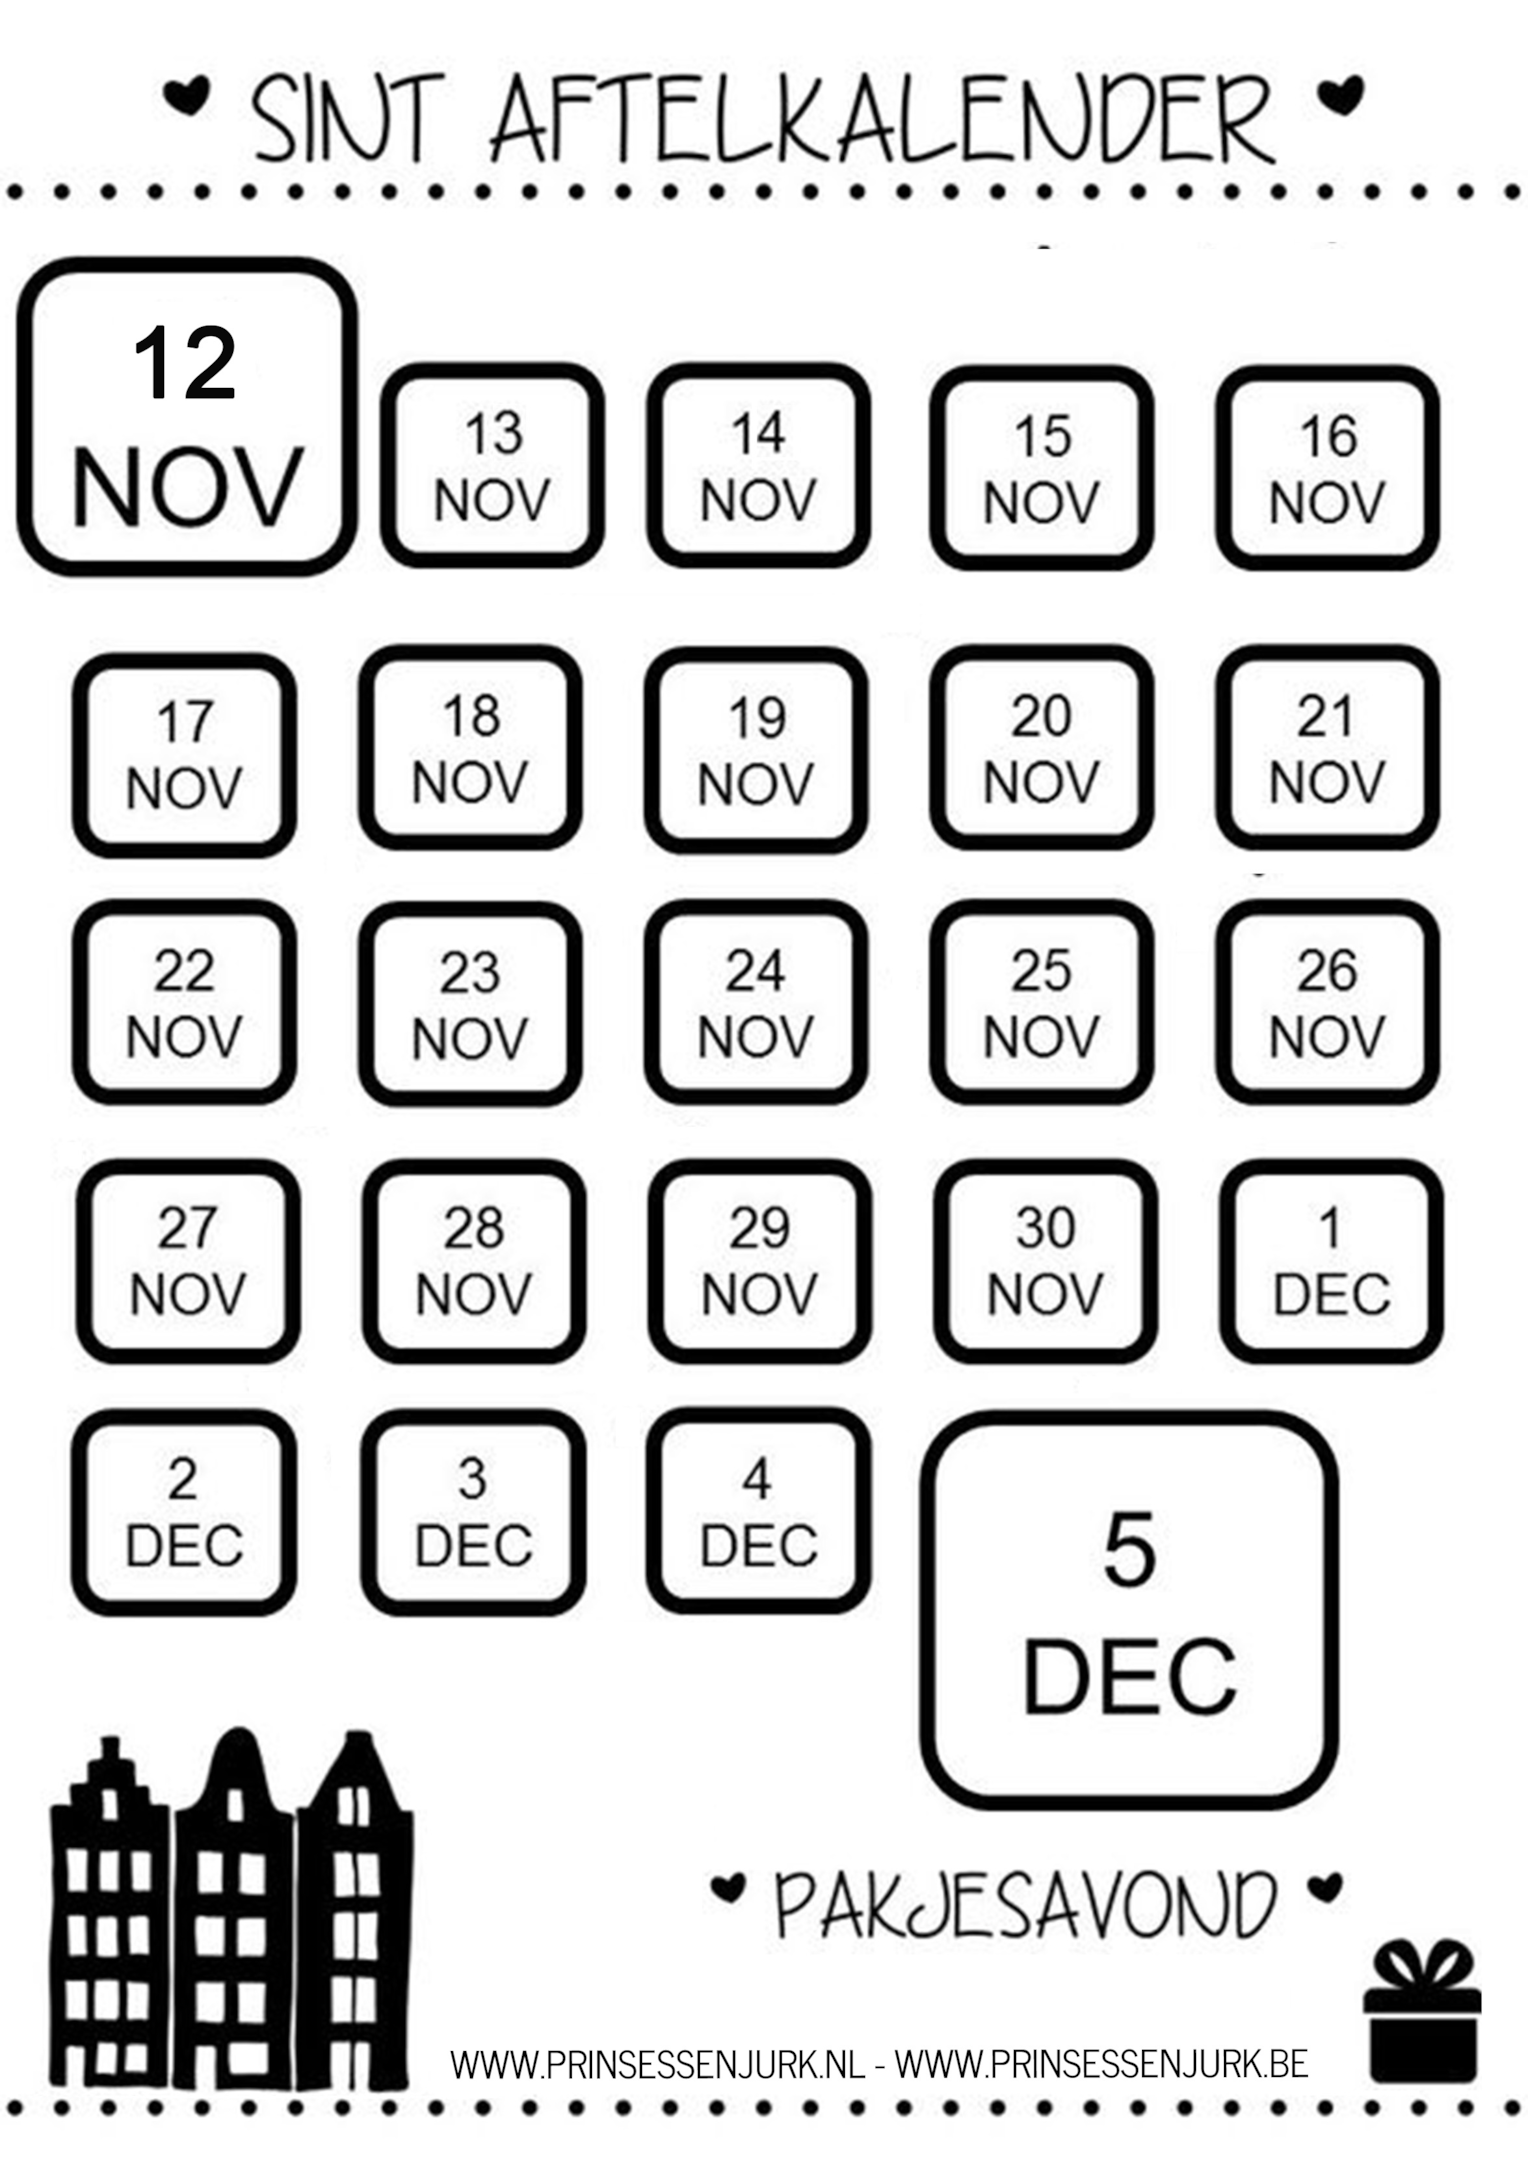 Sinterklaas pakjesavond aftelkalender gratis printable download